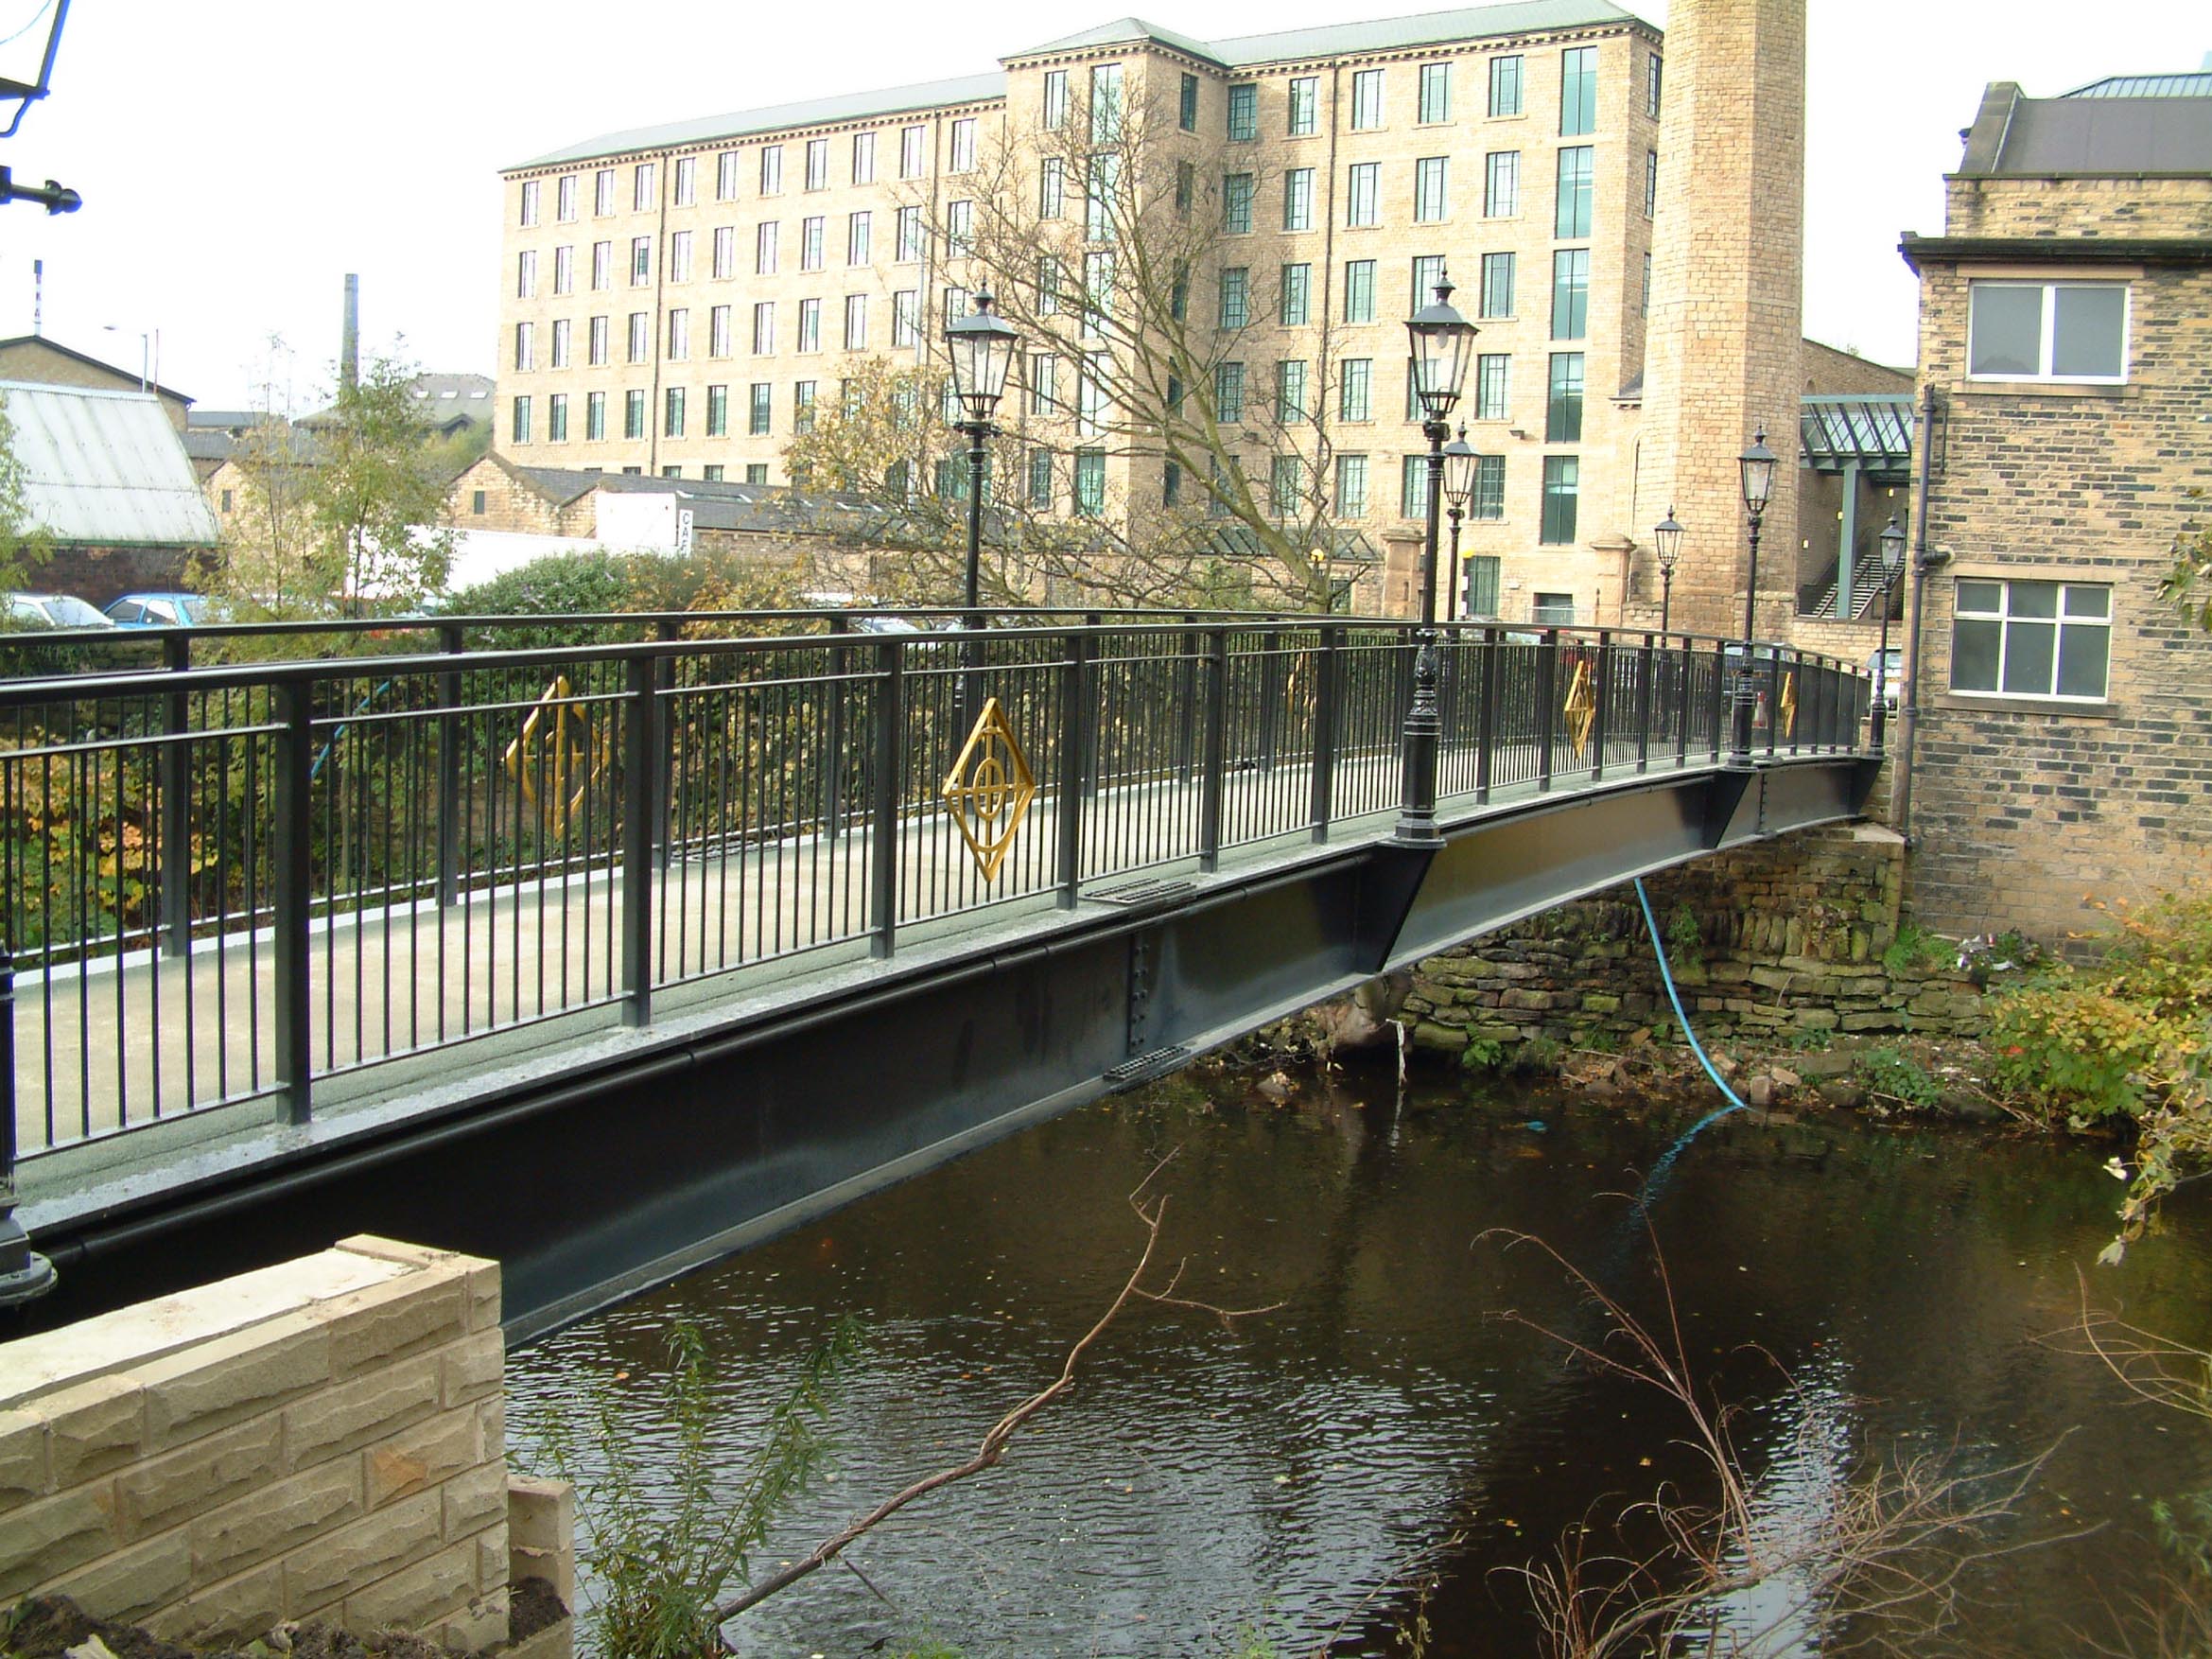 Totty; Steel Beam Footbridge with Type A parapet